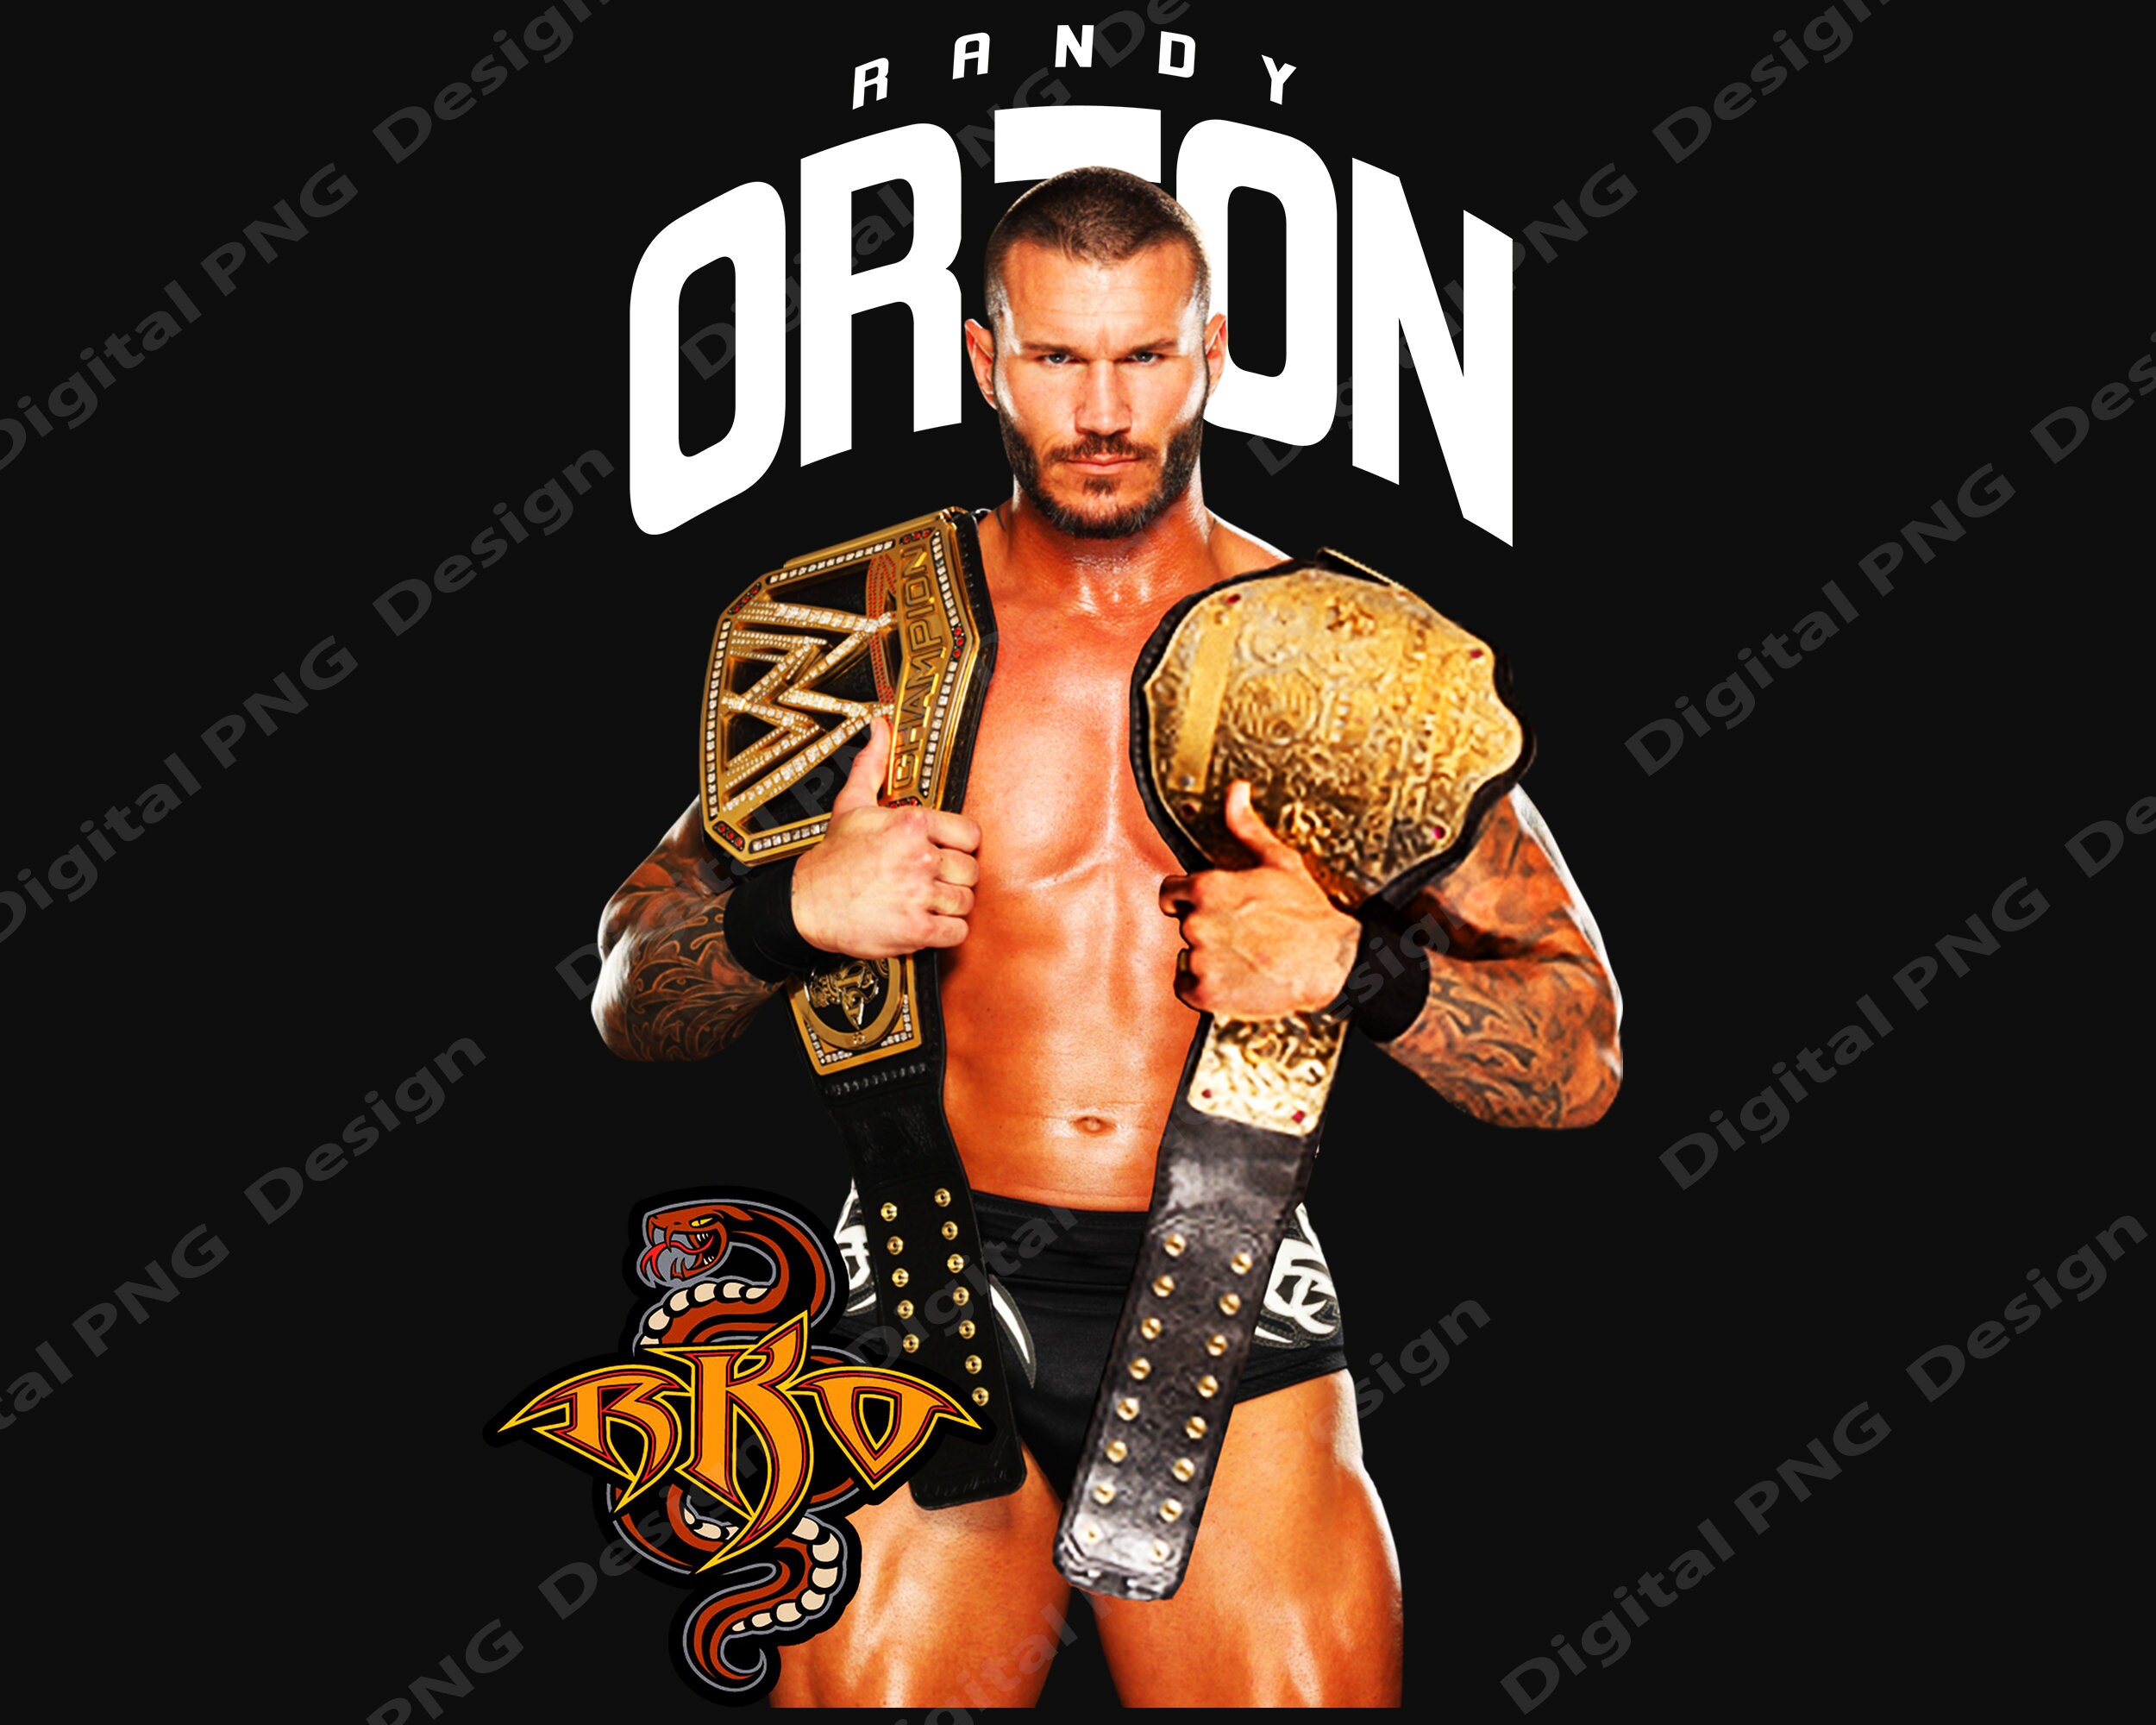 WWE T-shirt / 2013 Randy Orton / WWE Wrestling / 90s TV Show 